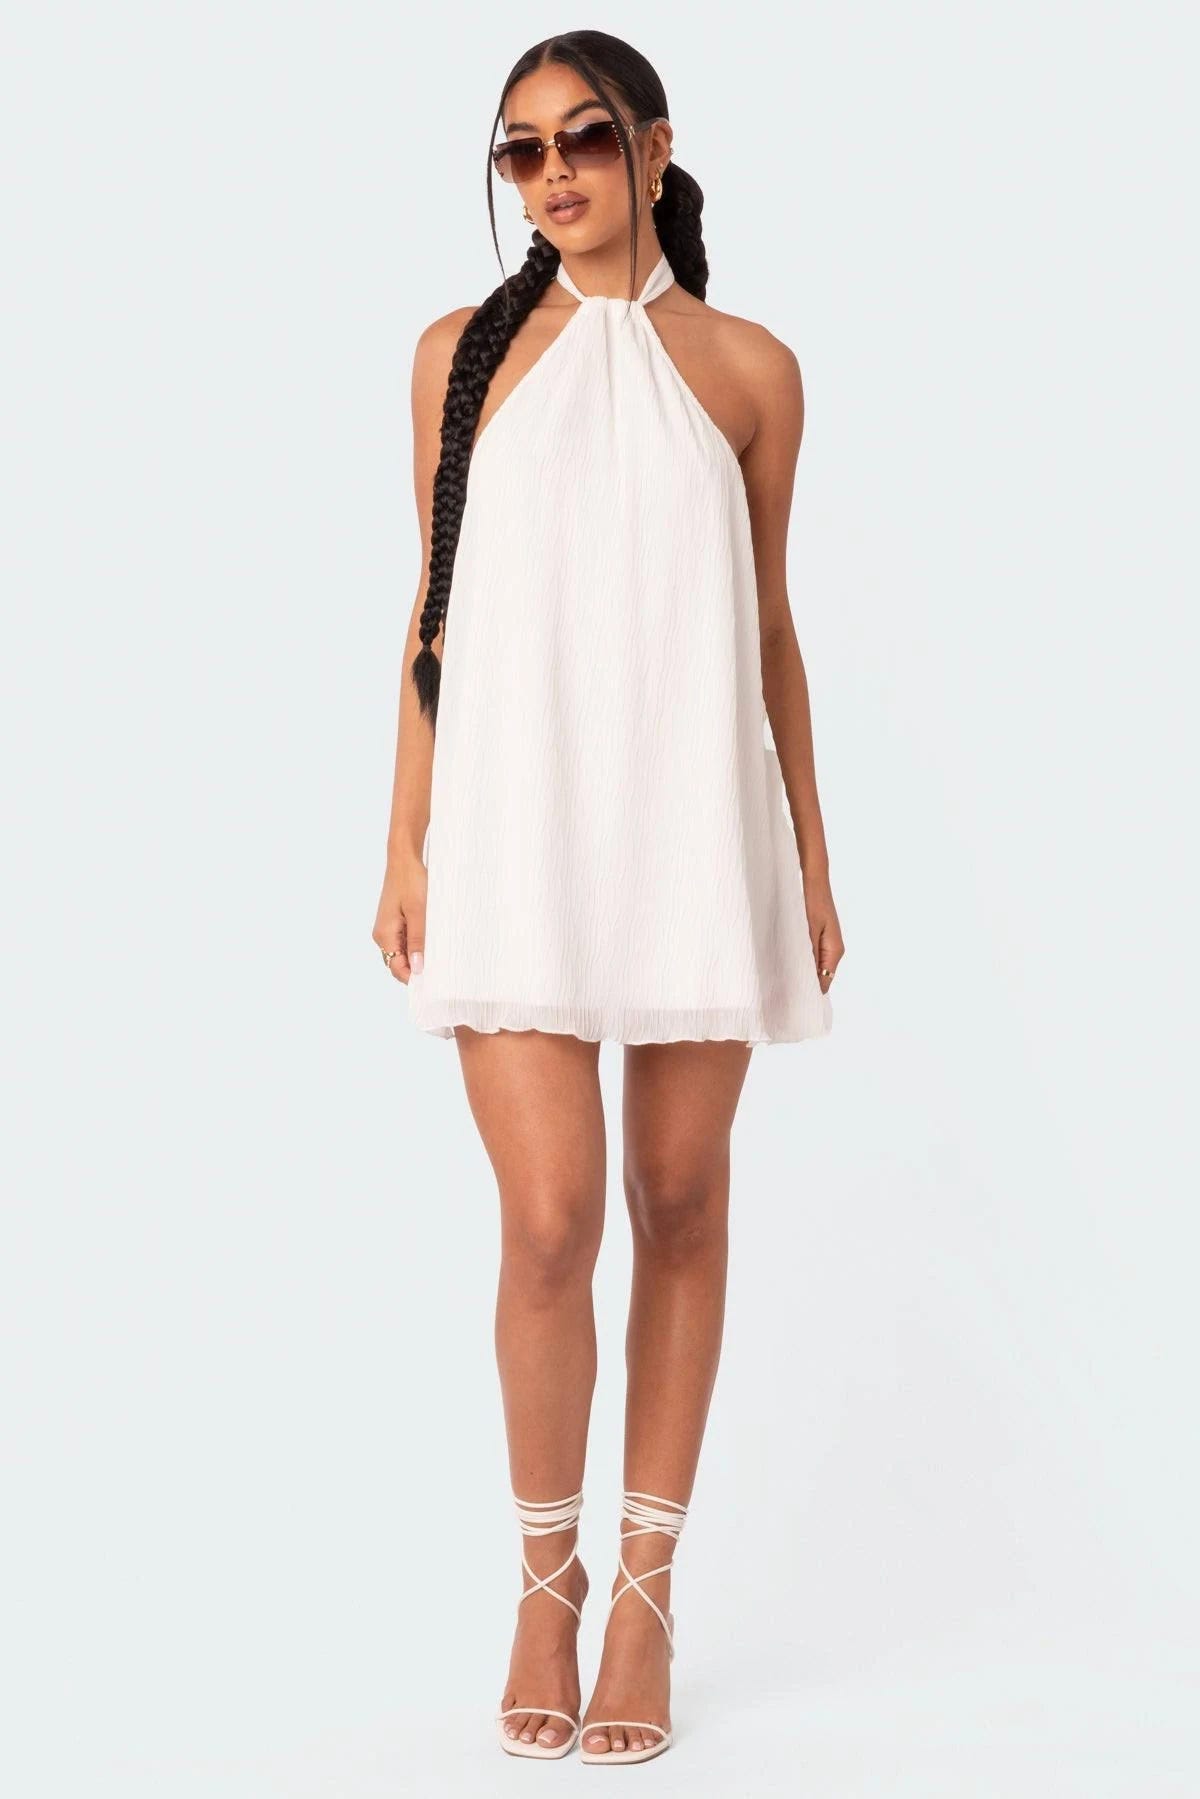 Open-Back White Mini Dress for Summer Events | Image